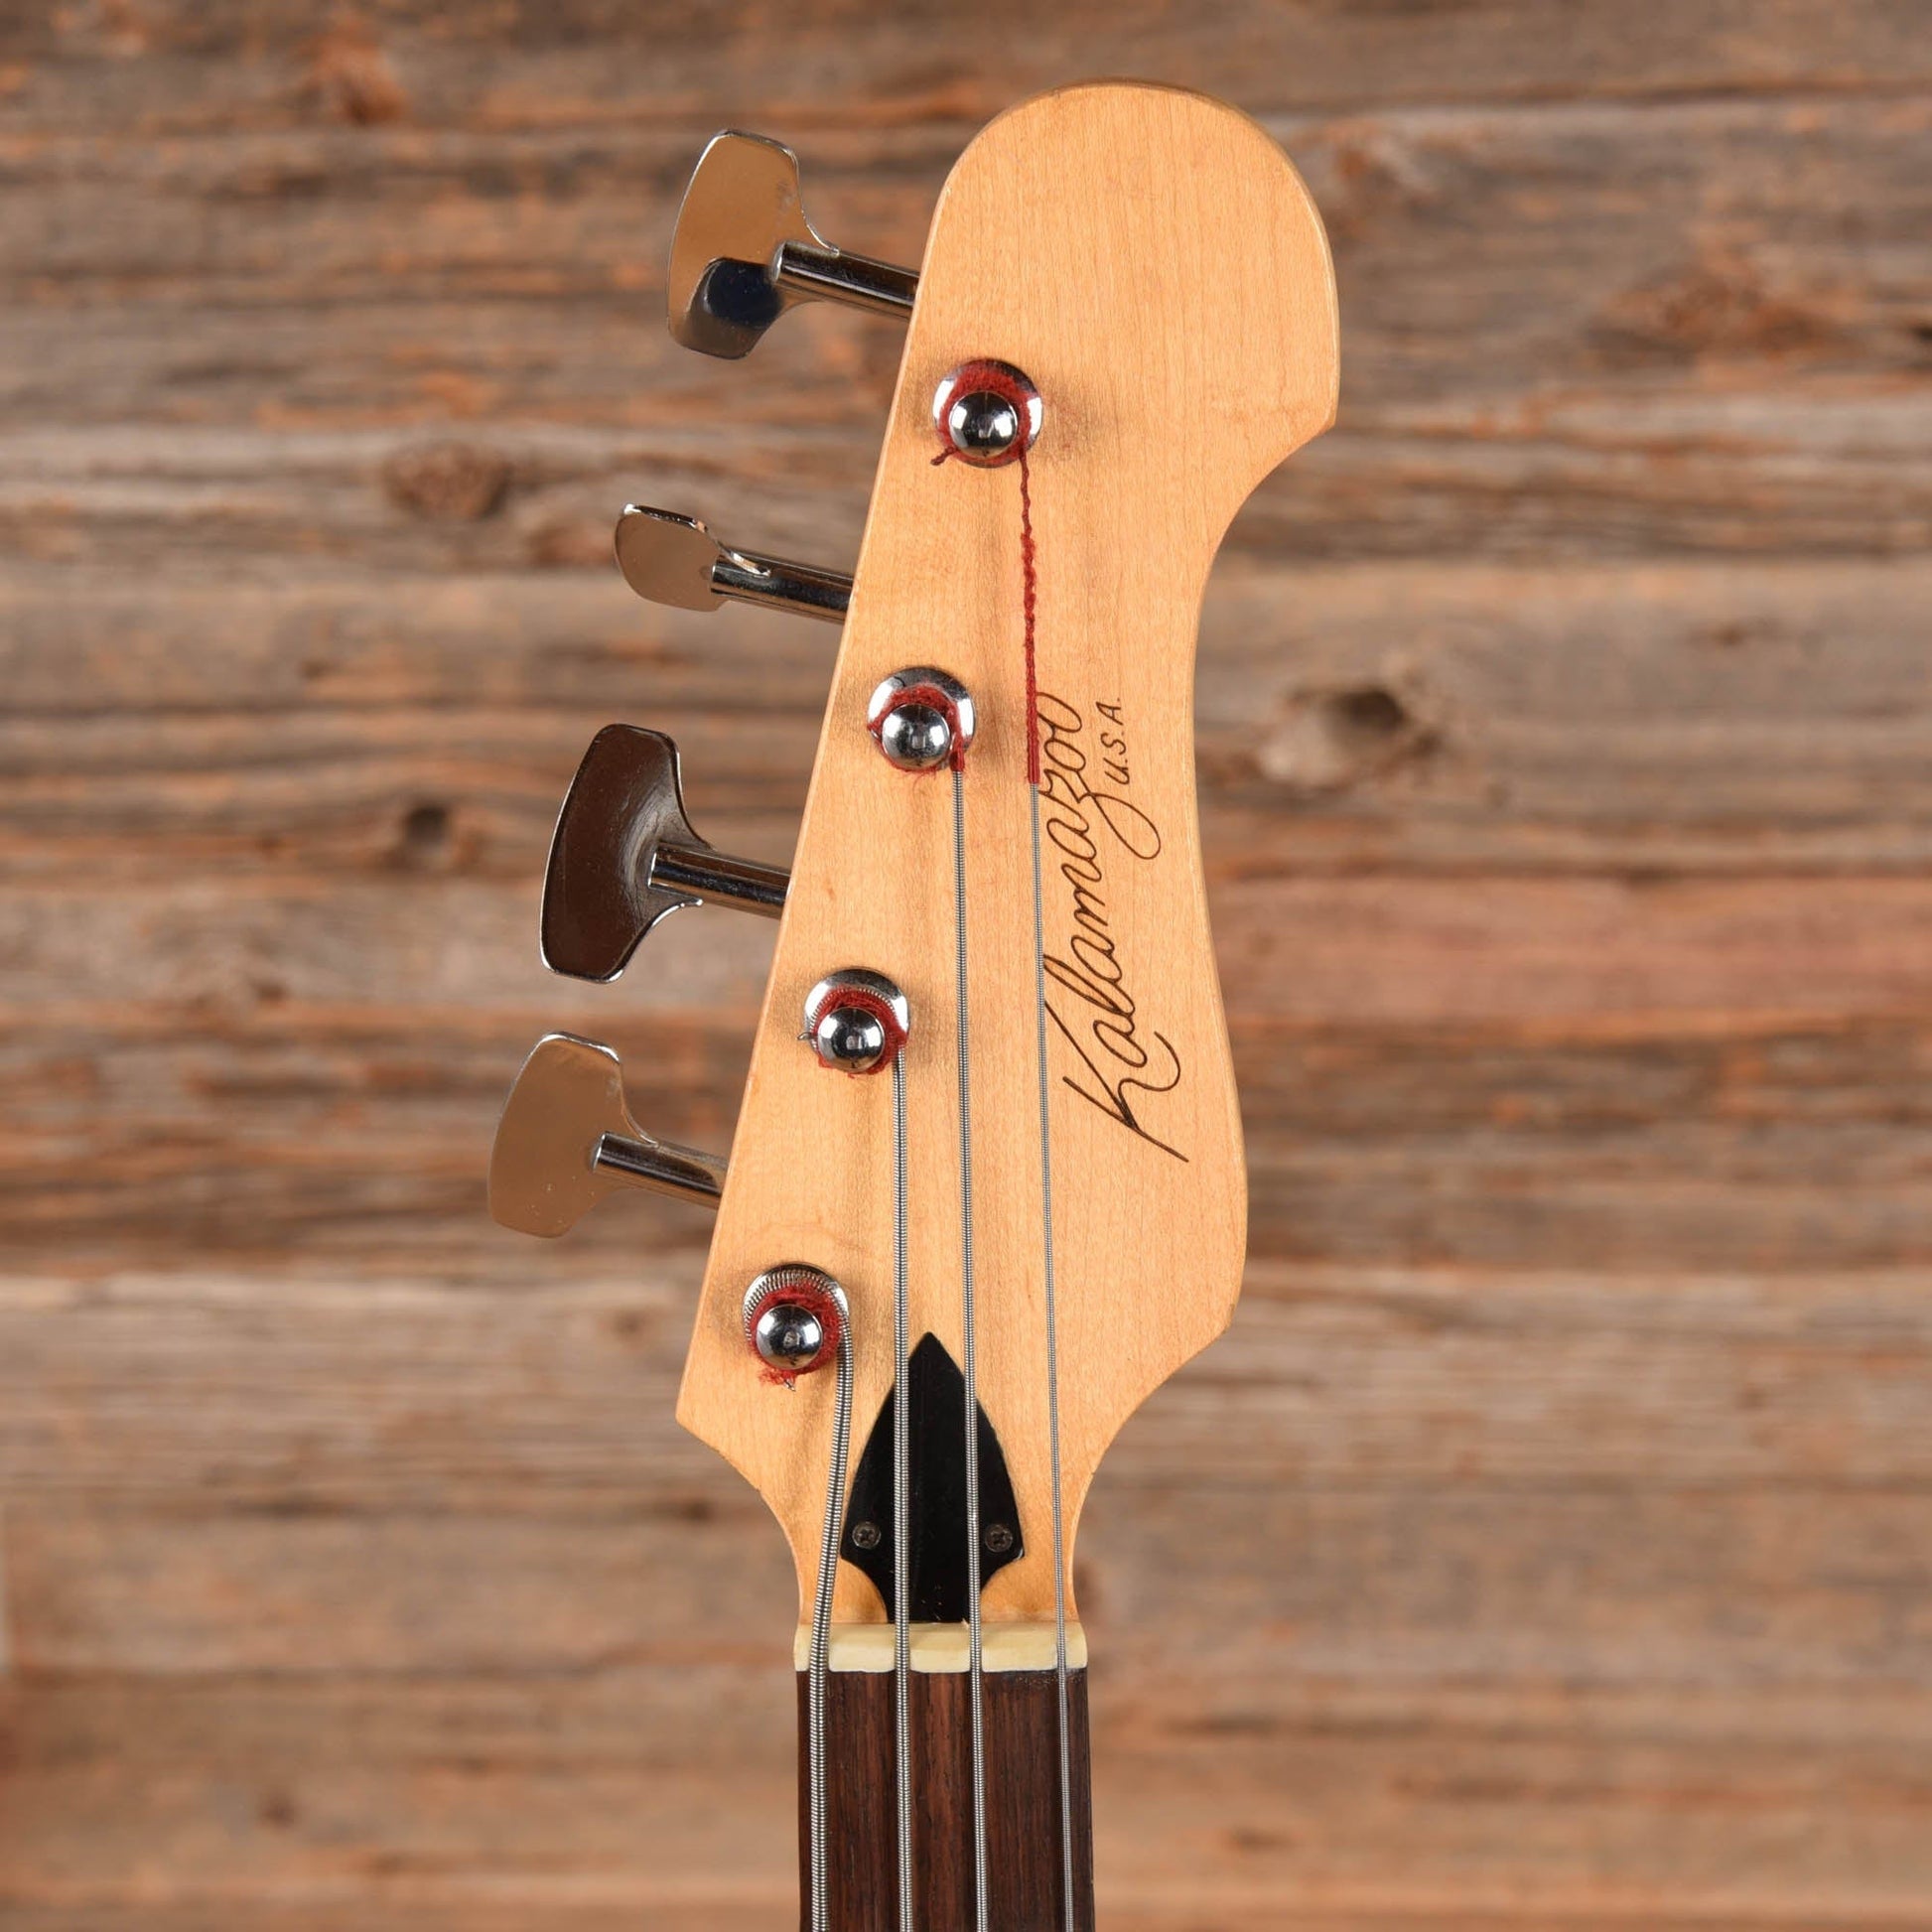 Kalamazoo KB-1 White 1960s Bass Guitars / 4-String